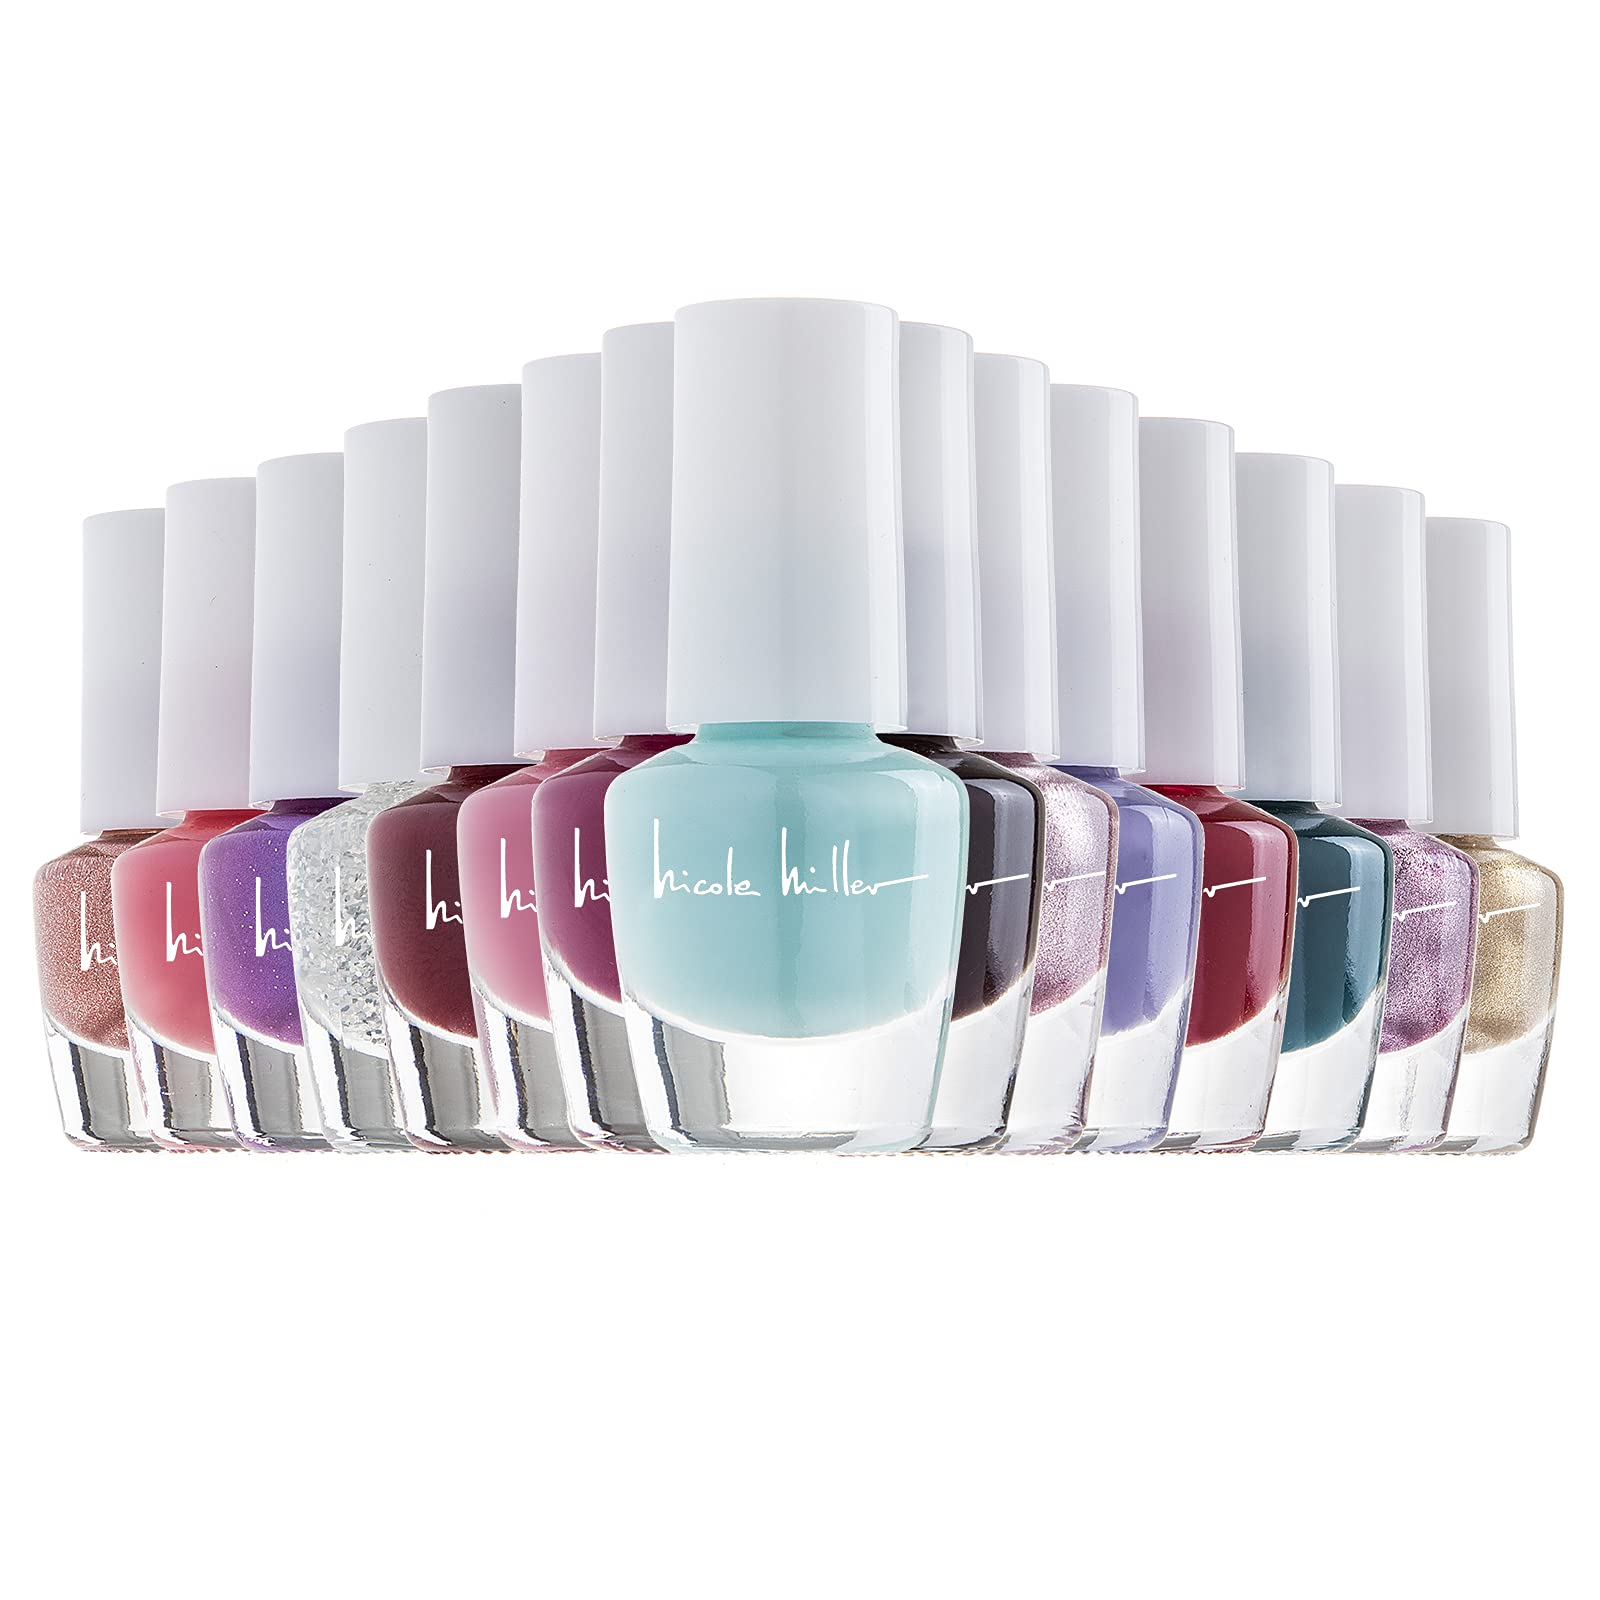 Amazon.com : BL Neon Nail Polish Gift Set - 6 Pack Nail Polish with Trendy  Neon Nail Polish Colors : Beauty & Personal Care